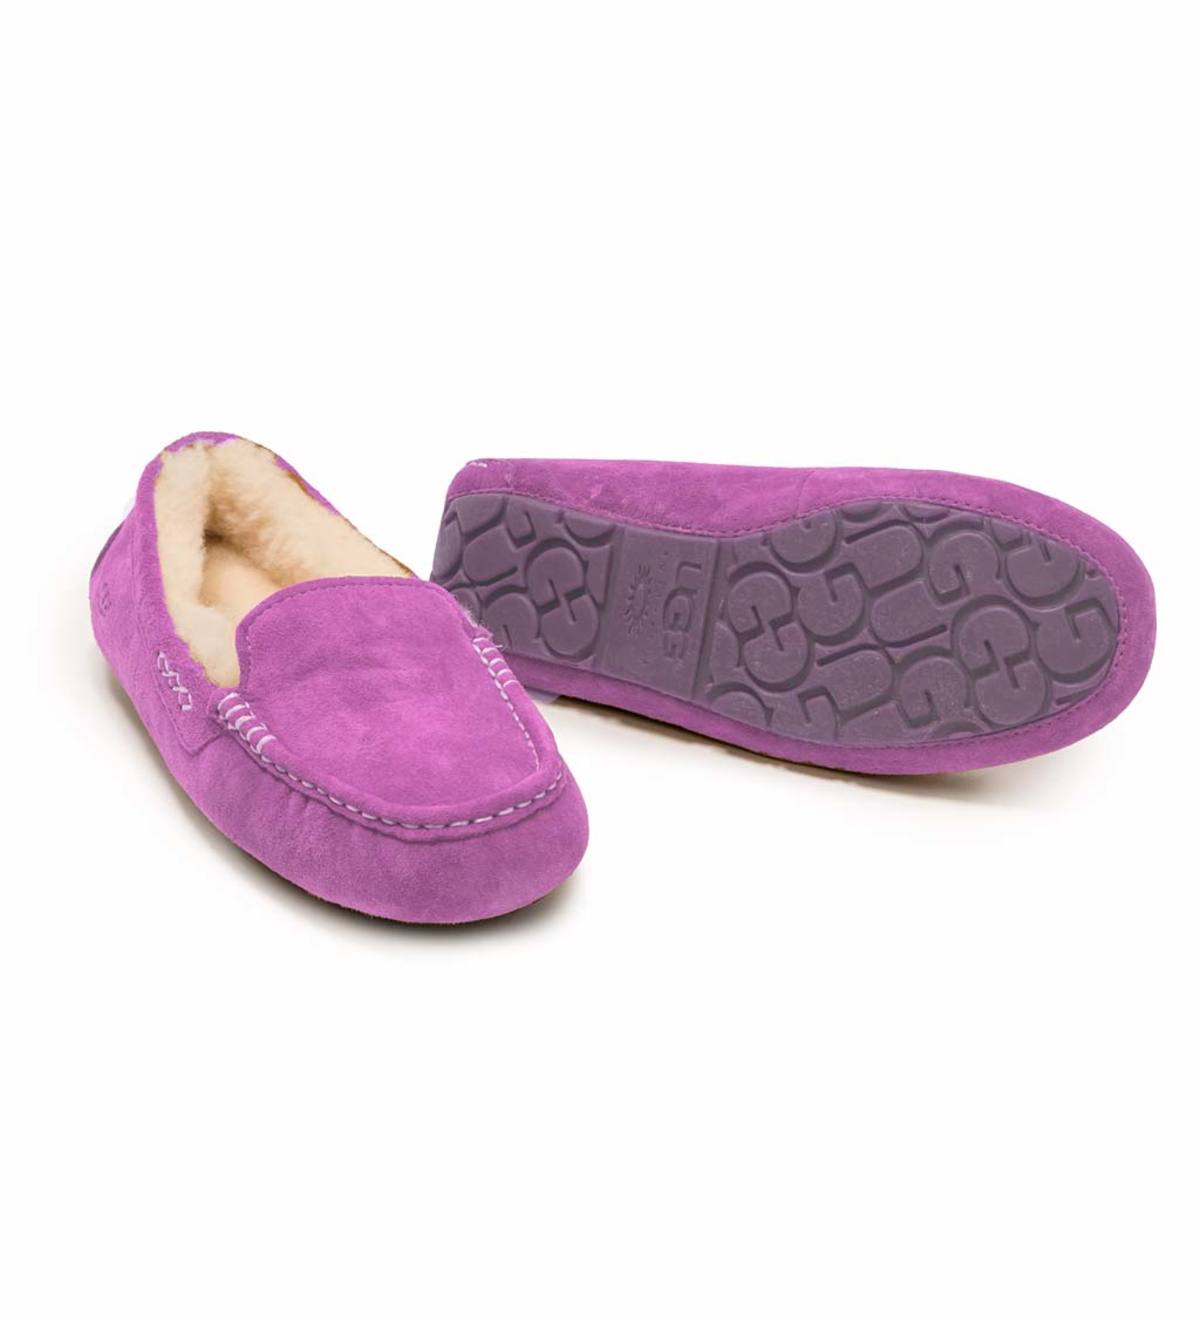 size 8 ugg ansley slippers